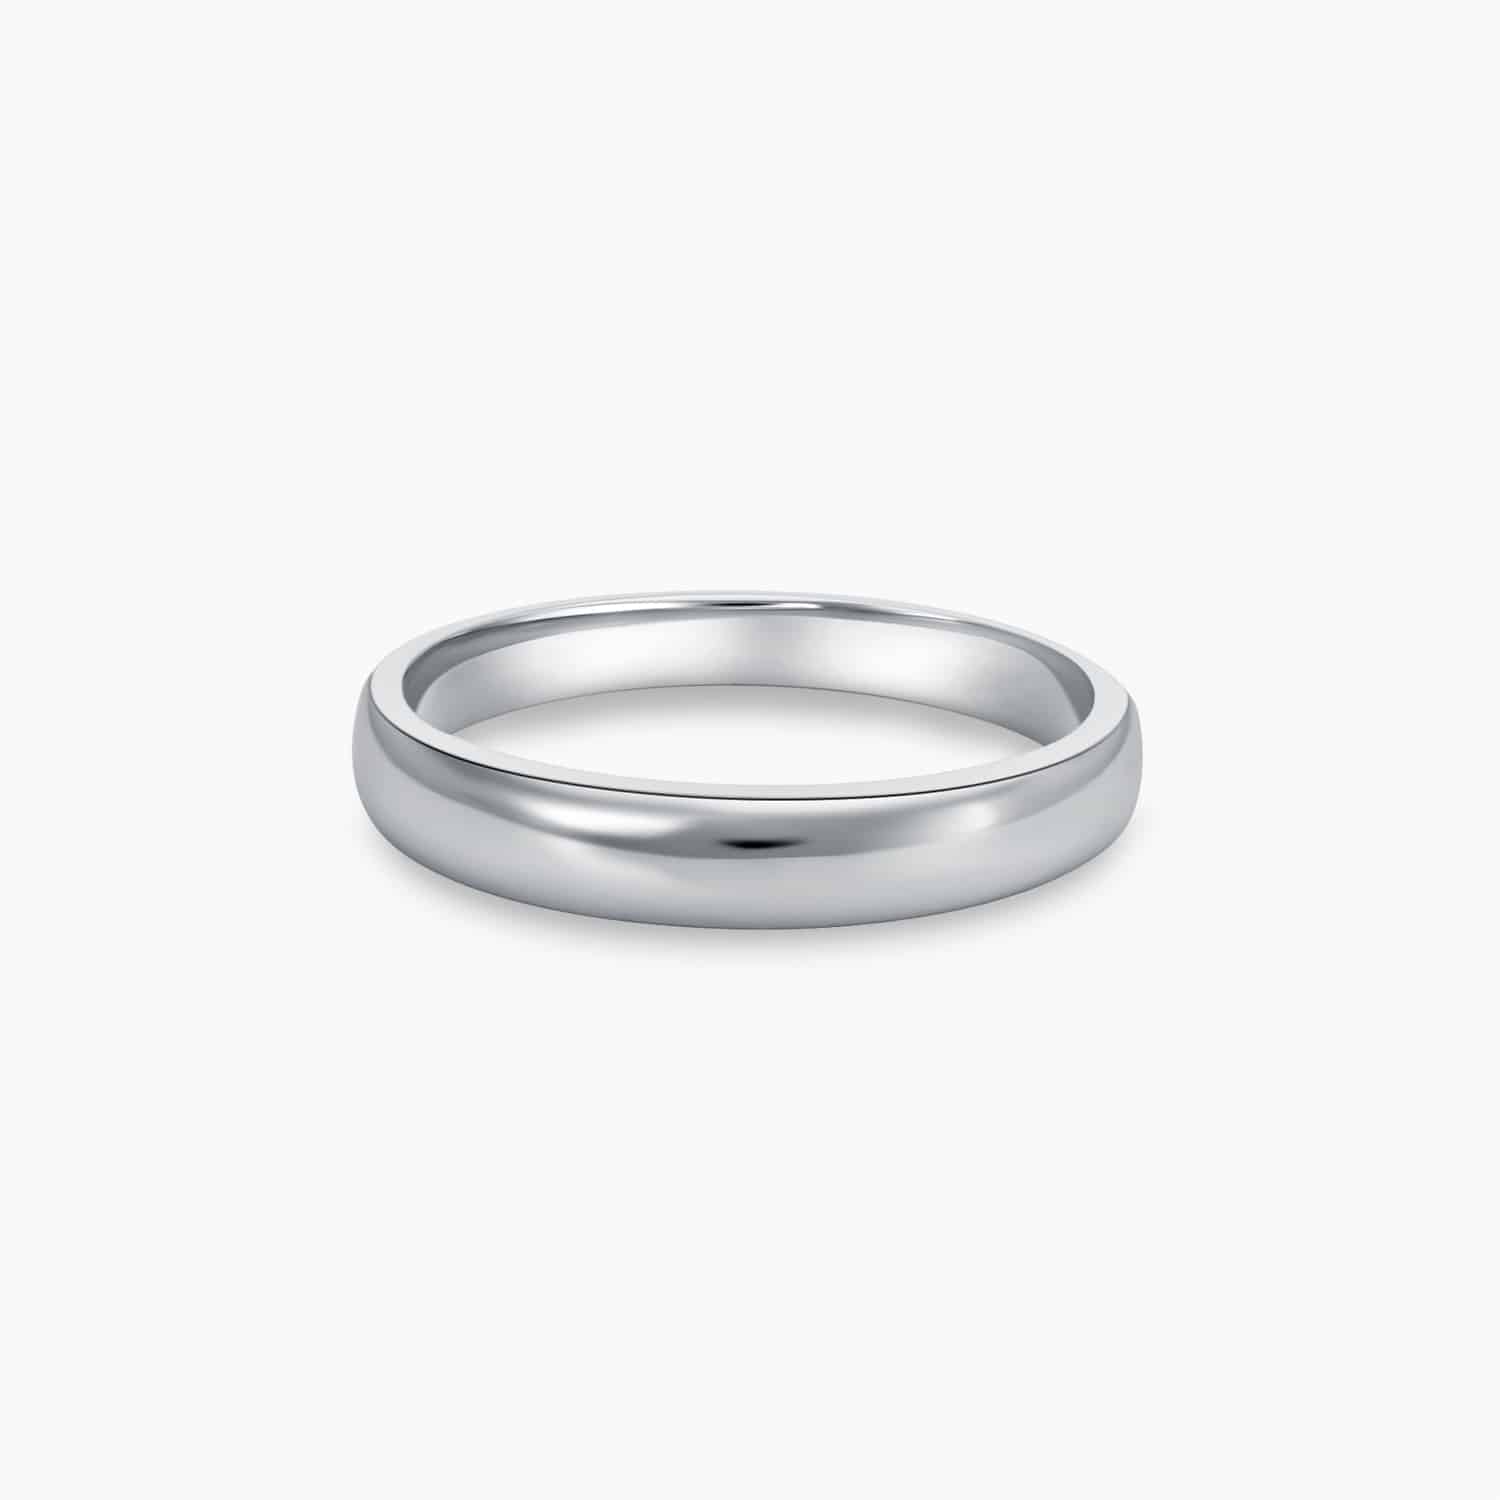 LVC DESIRIO CLASSIC WEDDING BAND IN WHITE GOLD a white gold engagement wedding ring or wedding band for men in 18k white gold